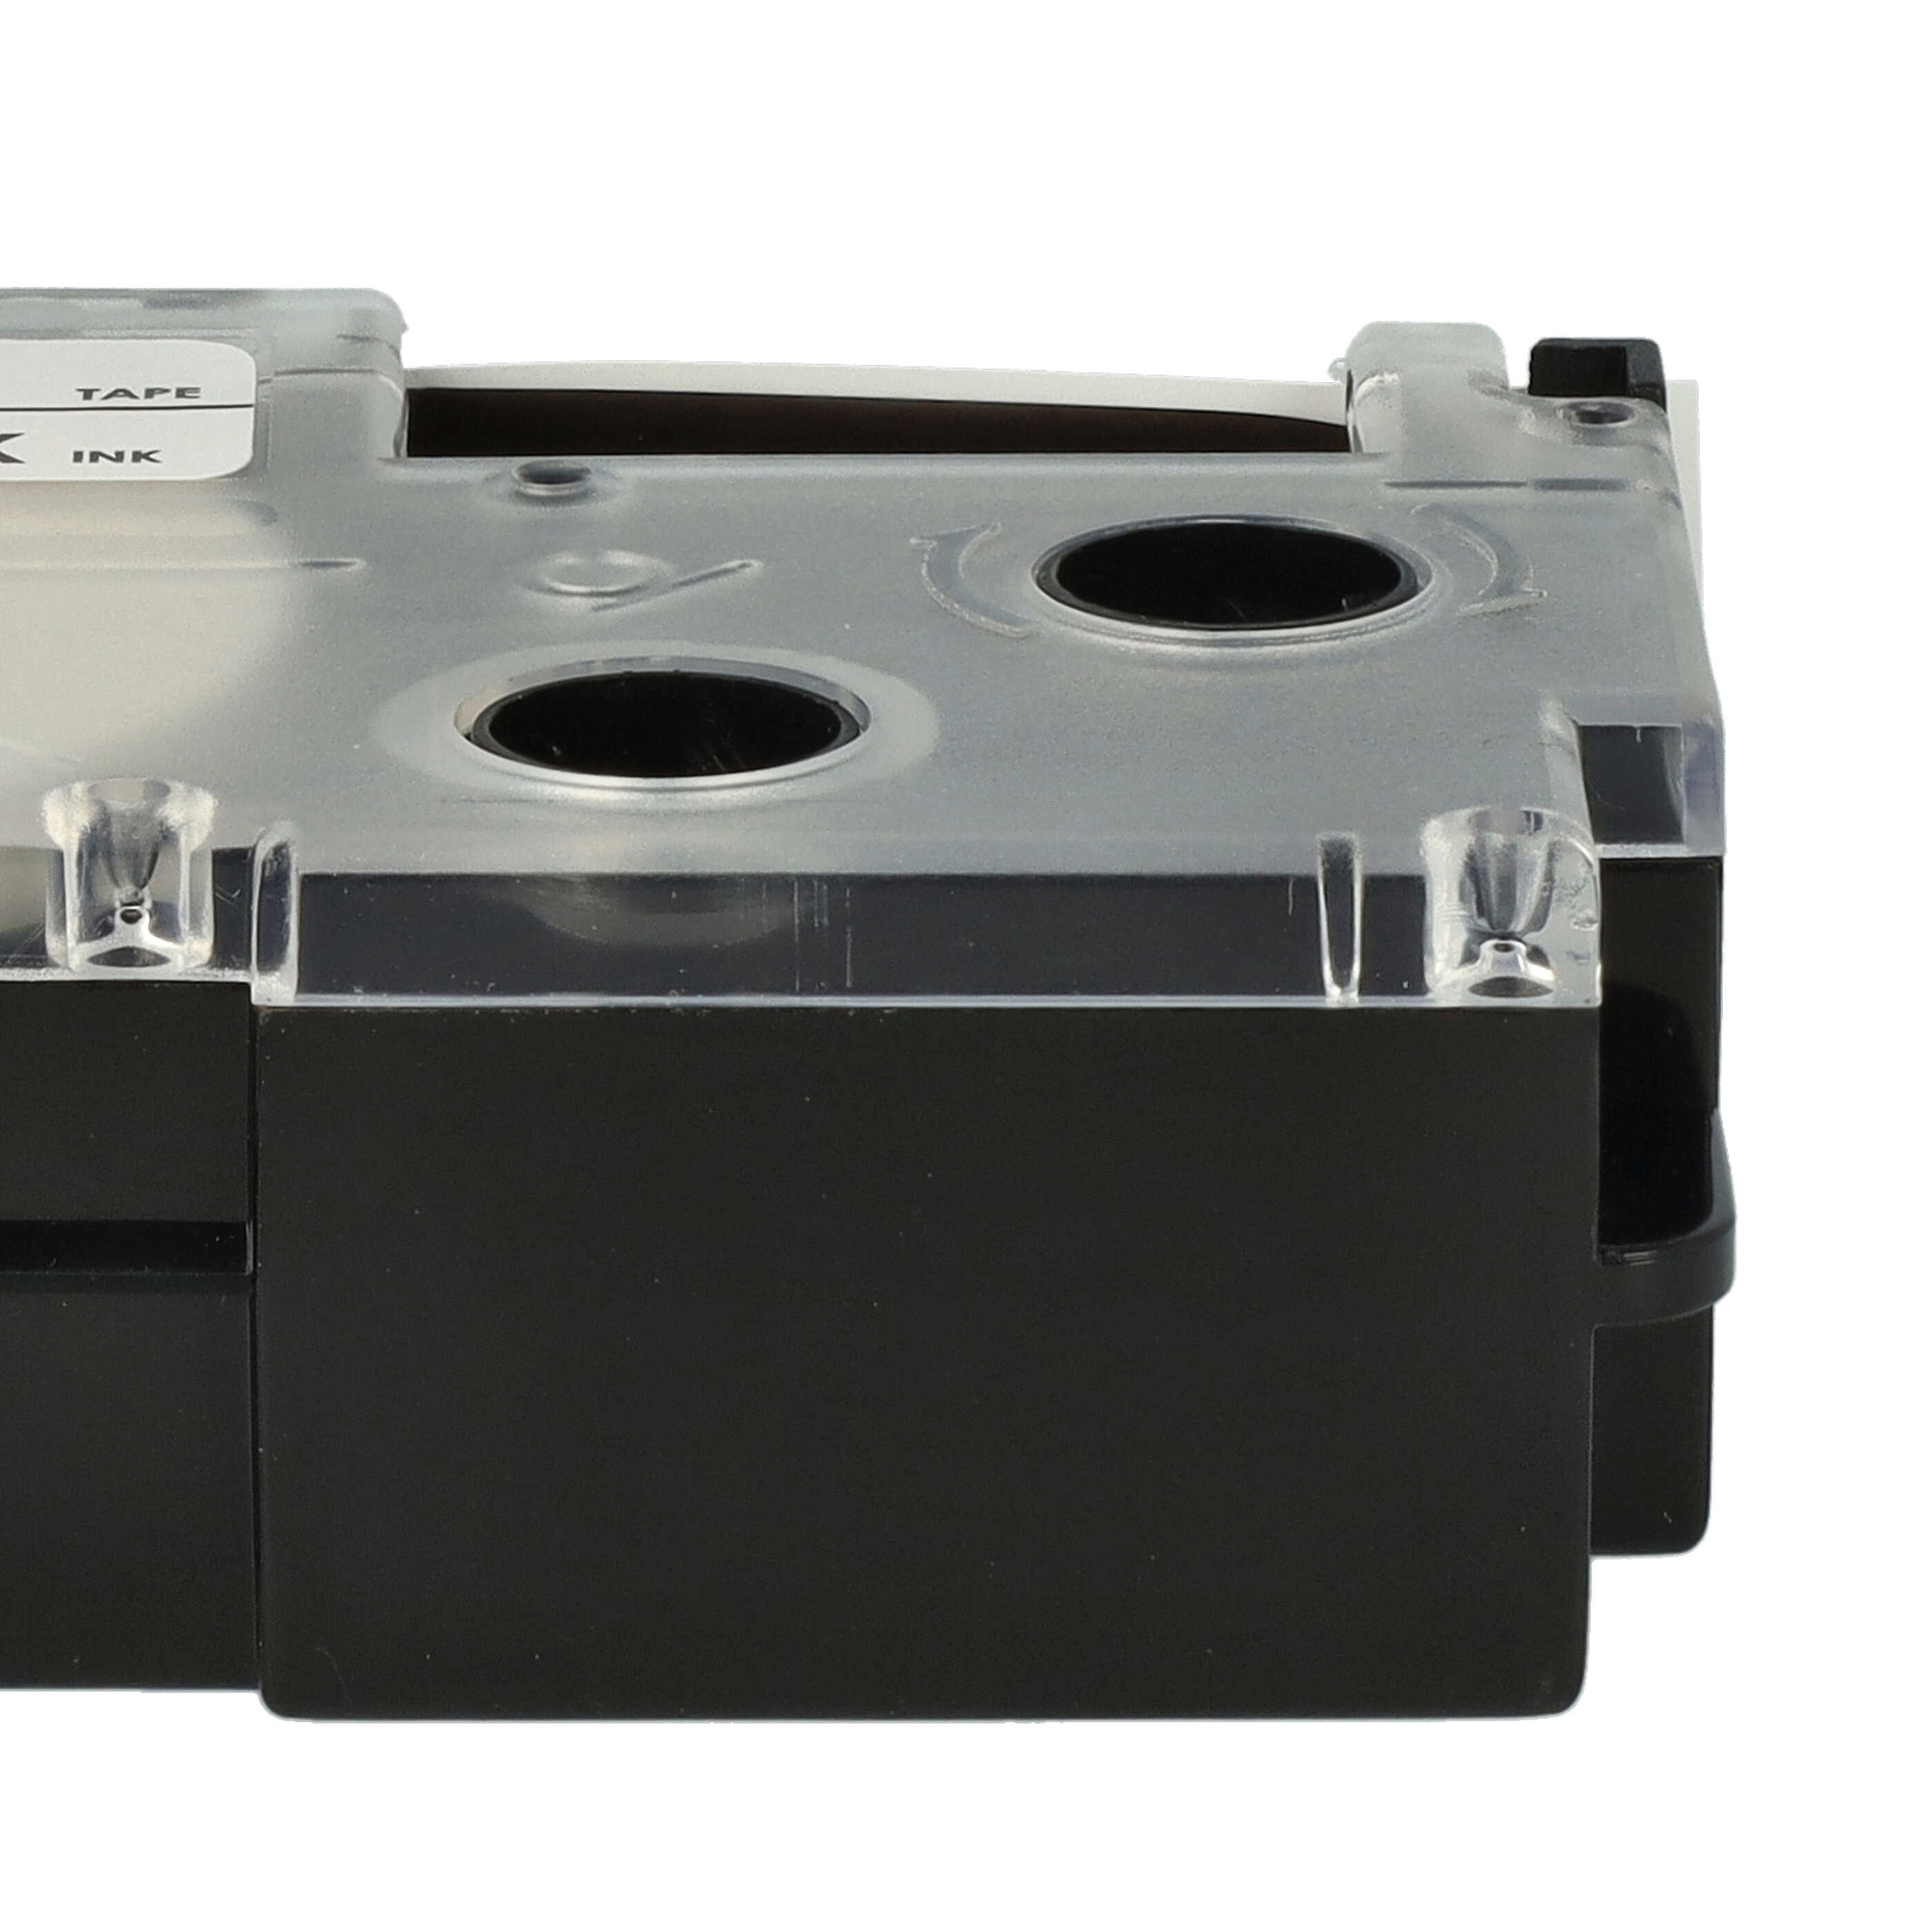 5x Casete cinta escritura reemplaza Casio XR-18WE1, XR-18WE Negro su Blanco